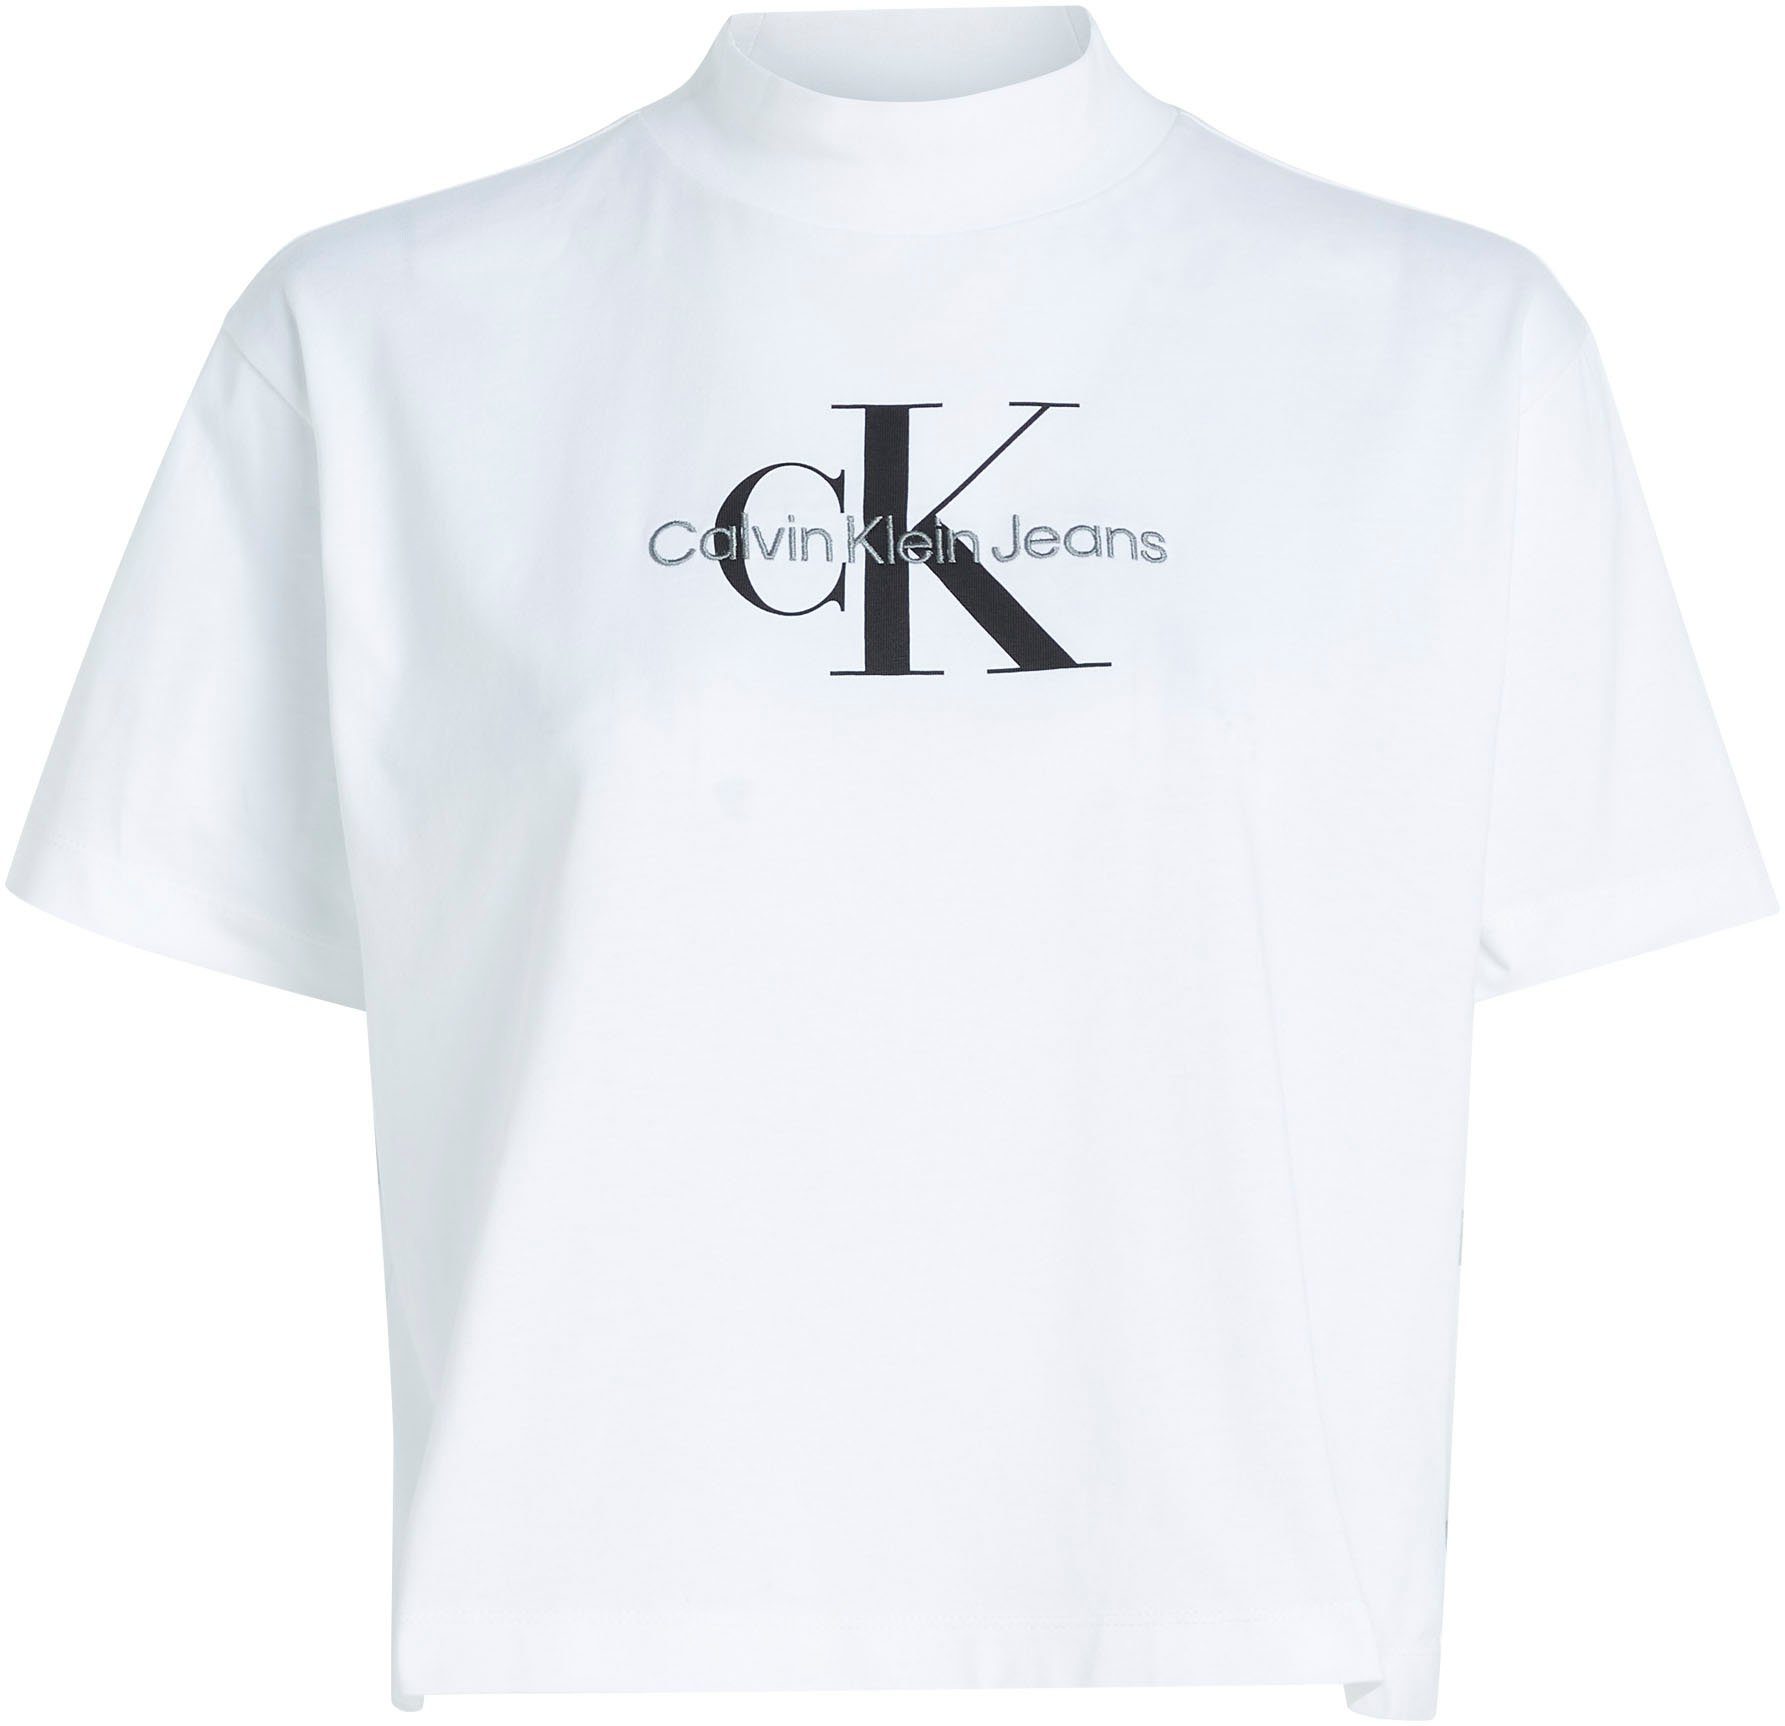 T-Shirt ARCHIVAL White Calvin MONOLOGO TEE Bright Jeans Klein